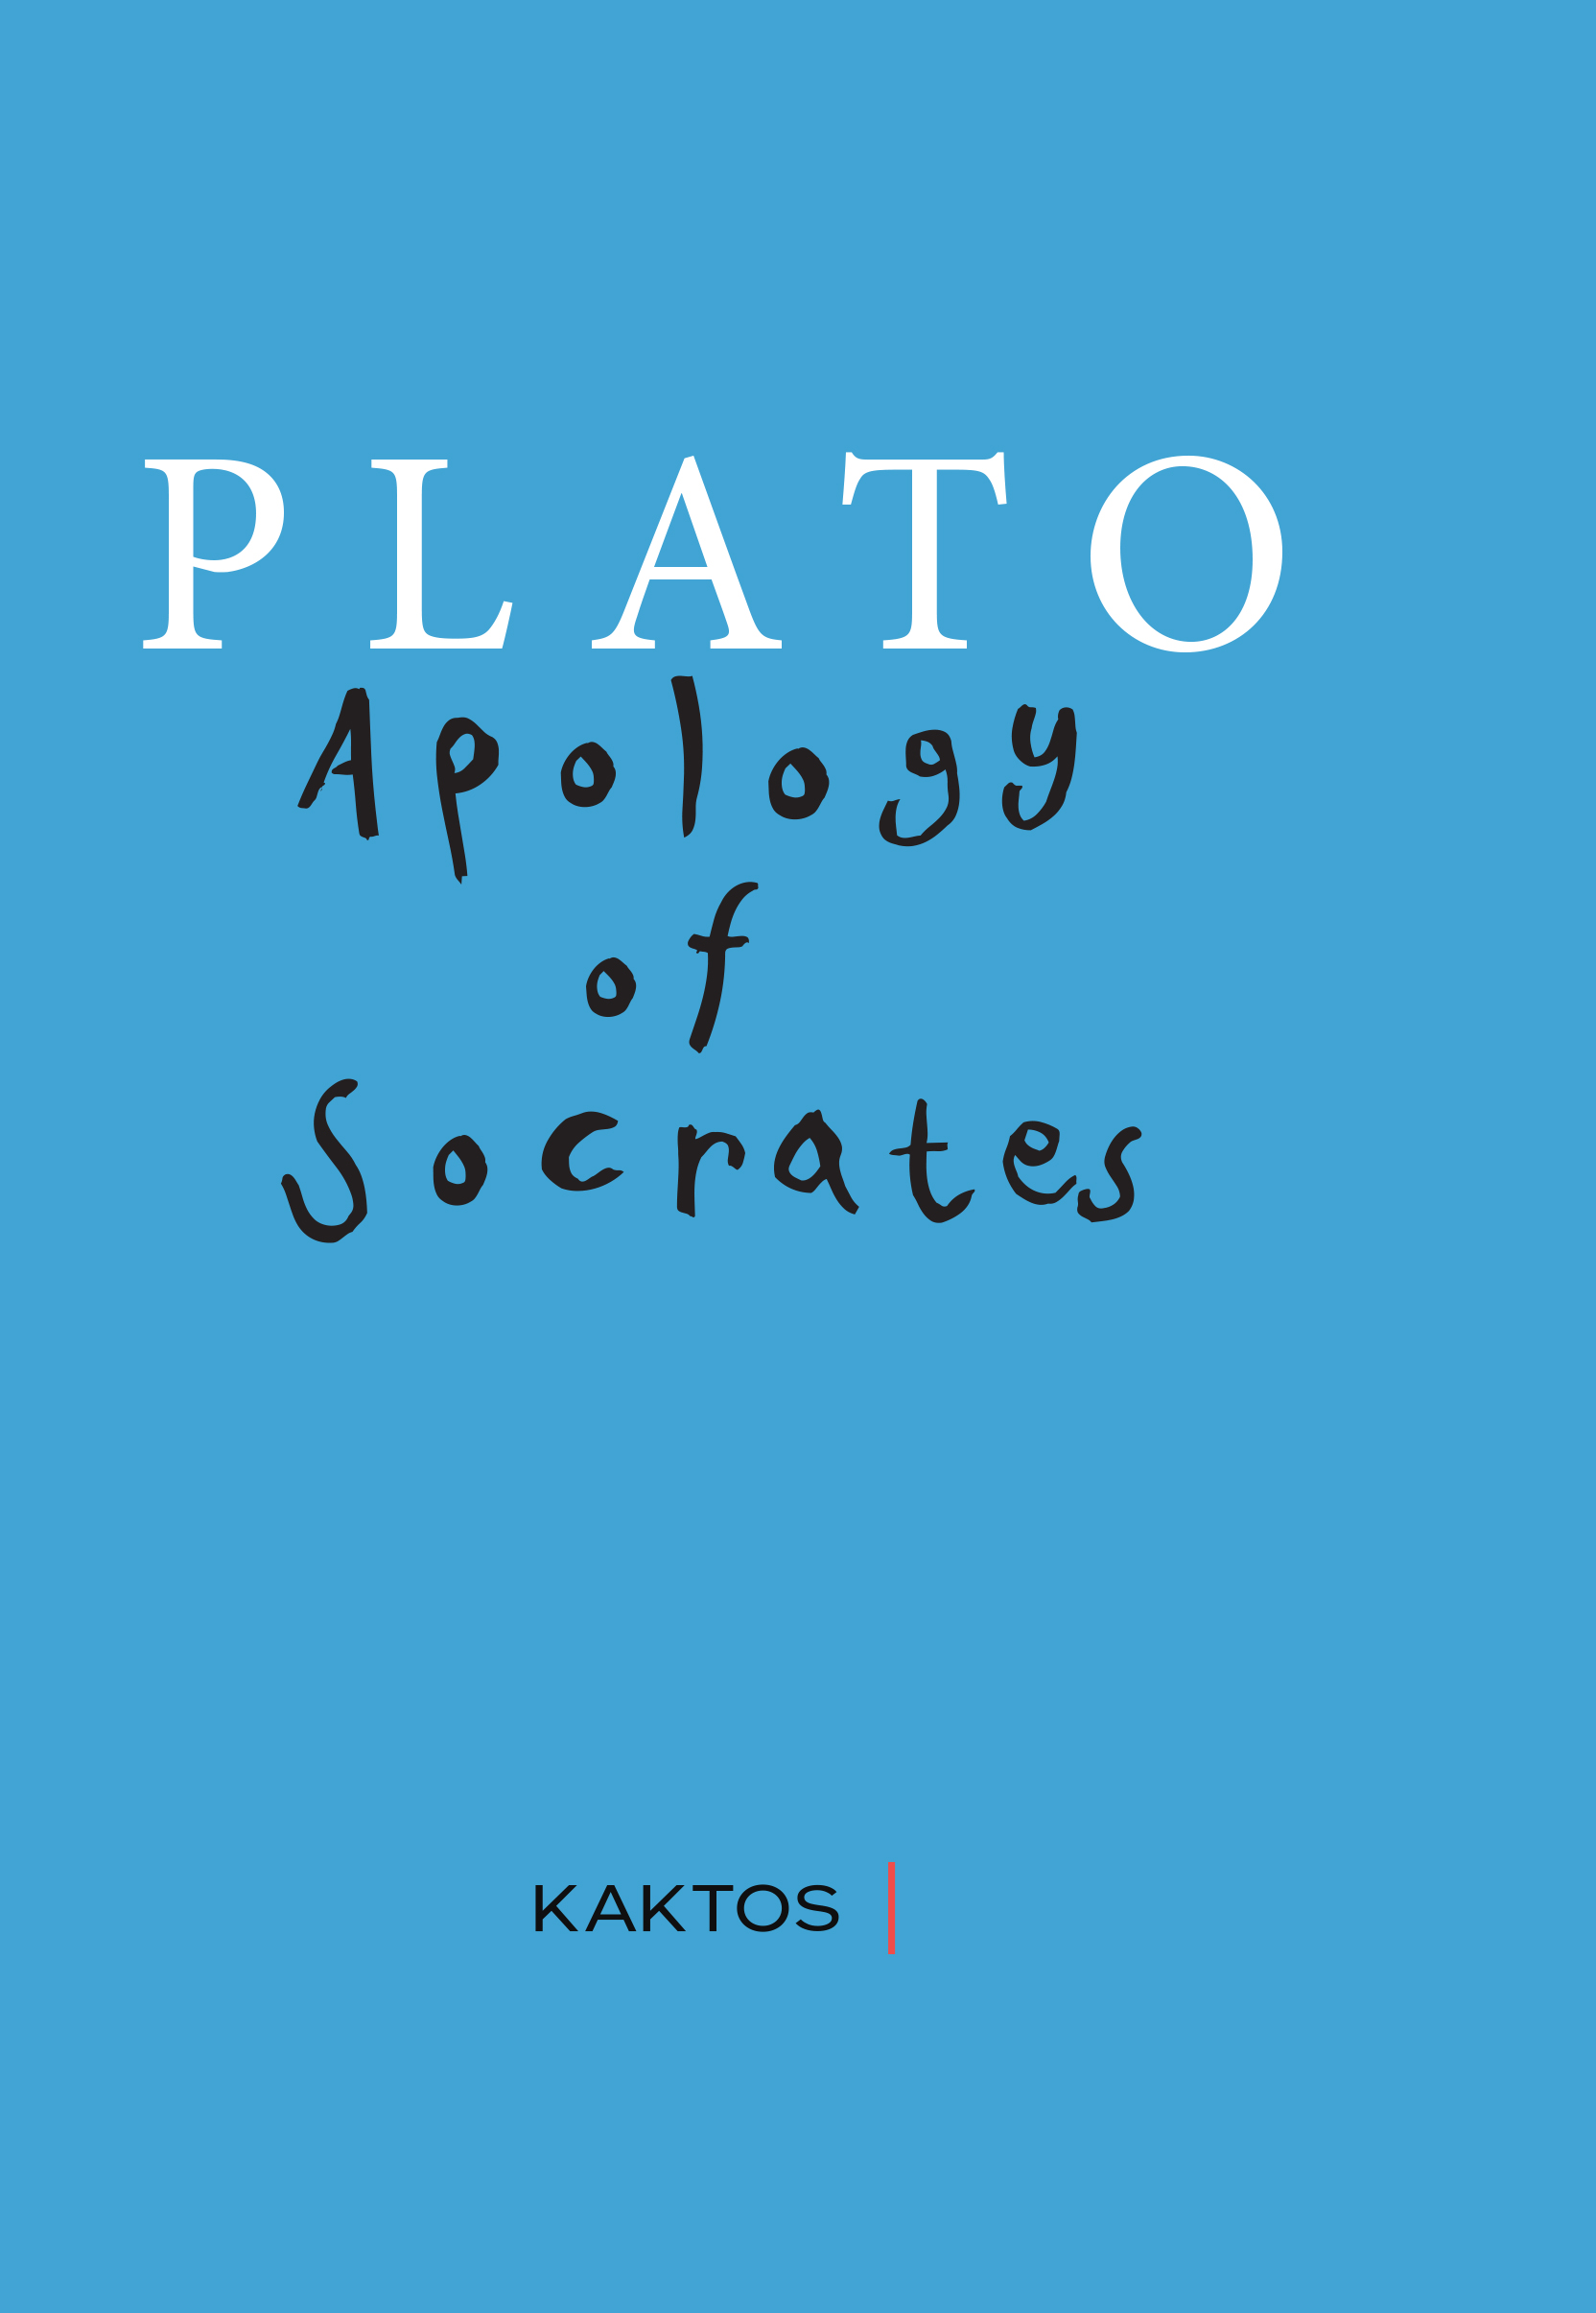 Kaktos_Ancient_final_PLATO.indd